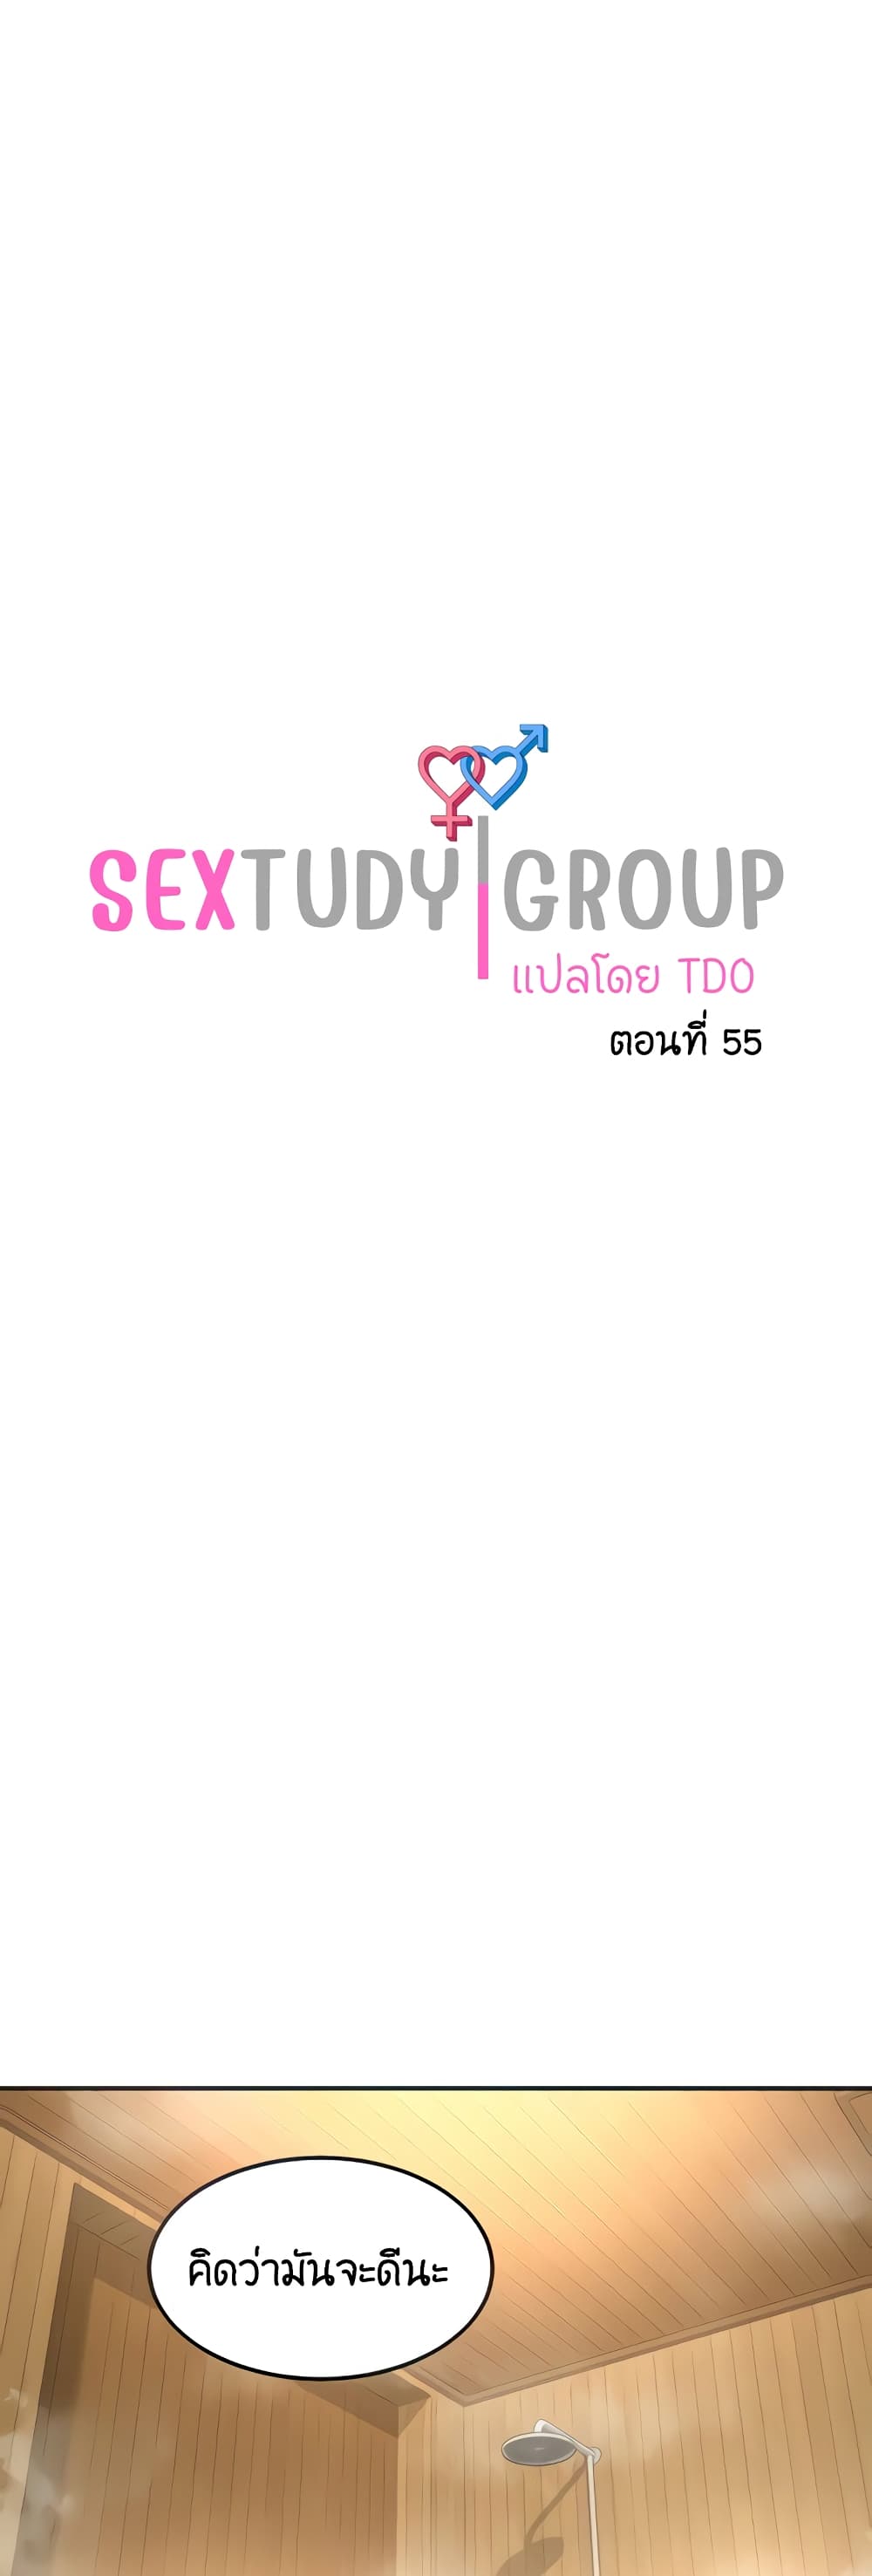 Sextudy Group 55-55